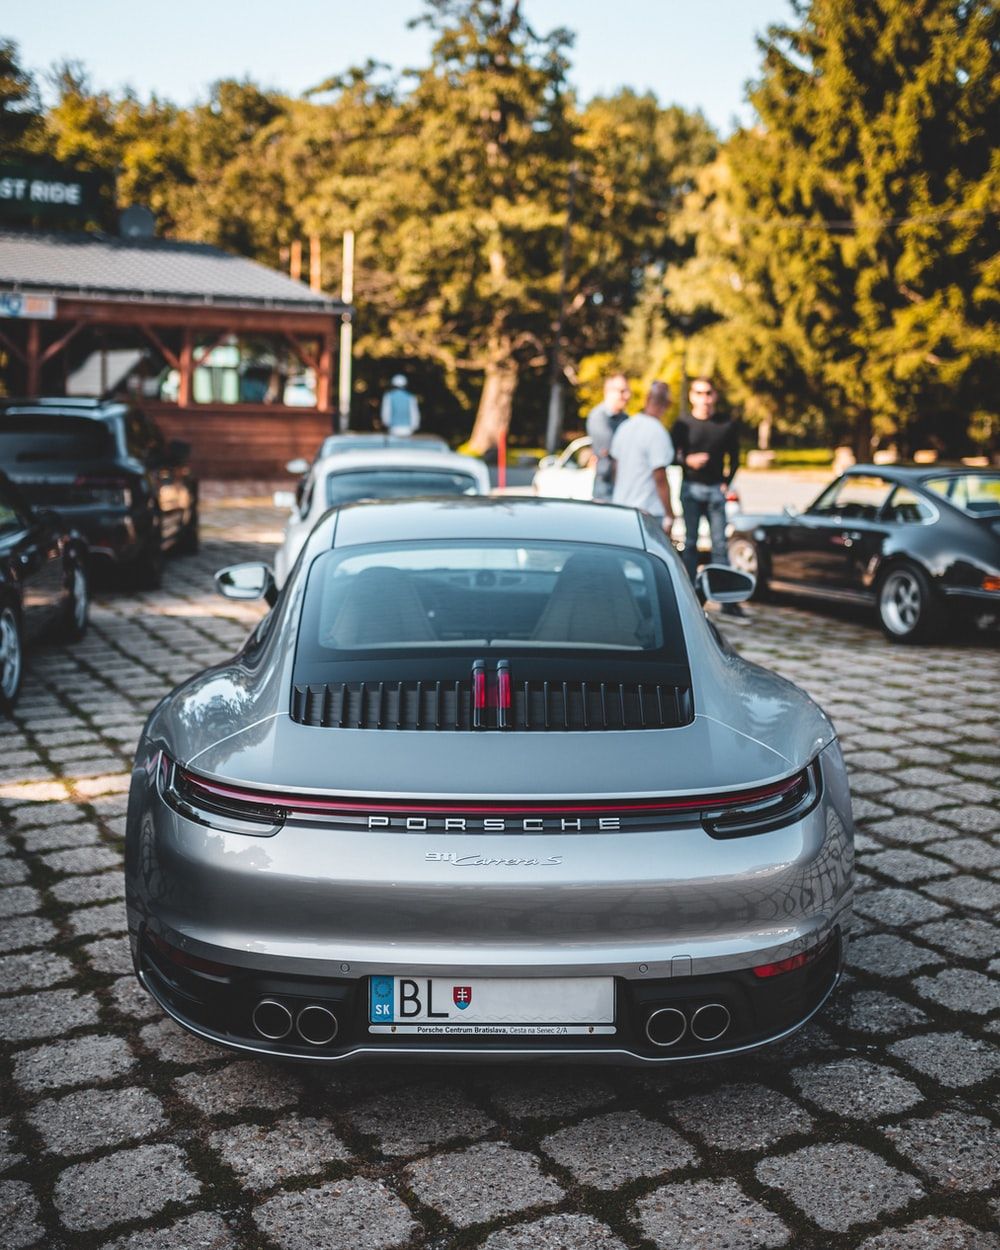 Porsche 911 Picture. Download Free Image